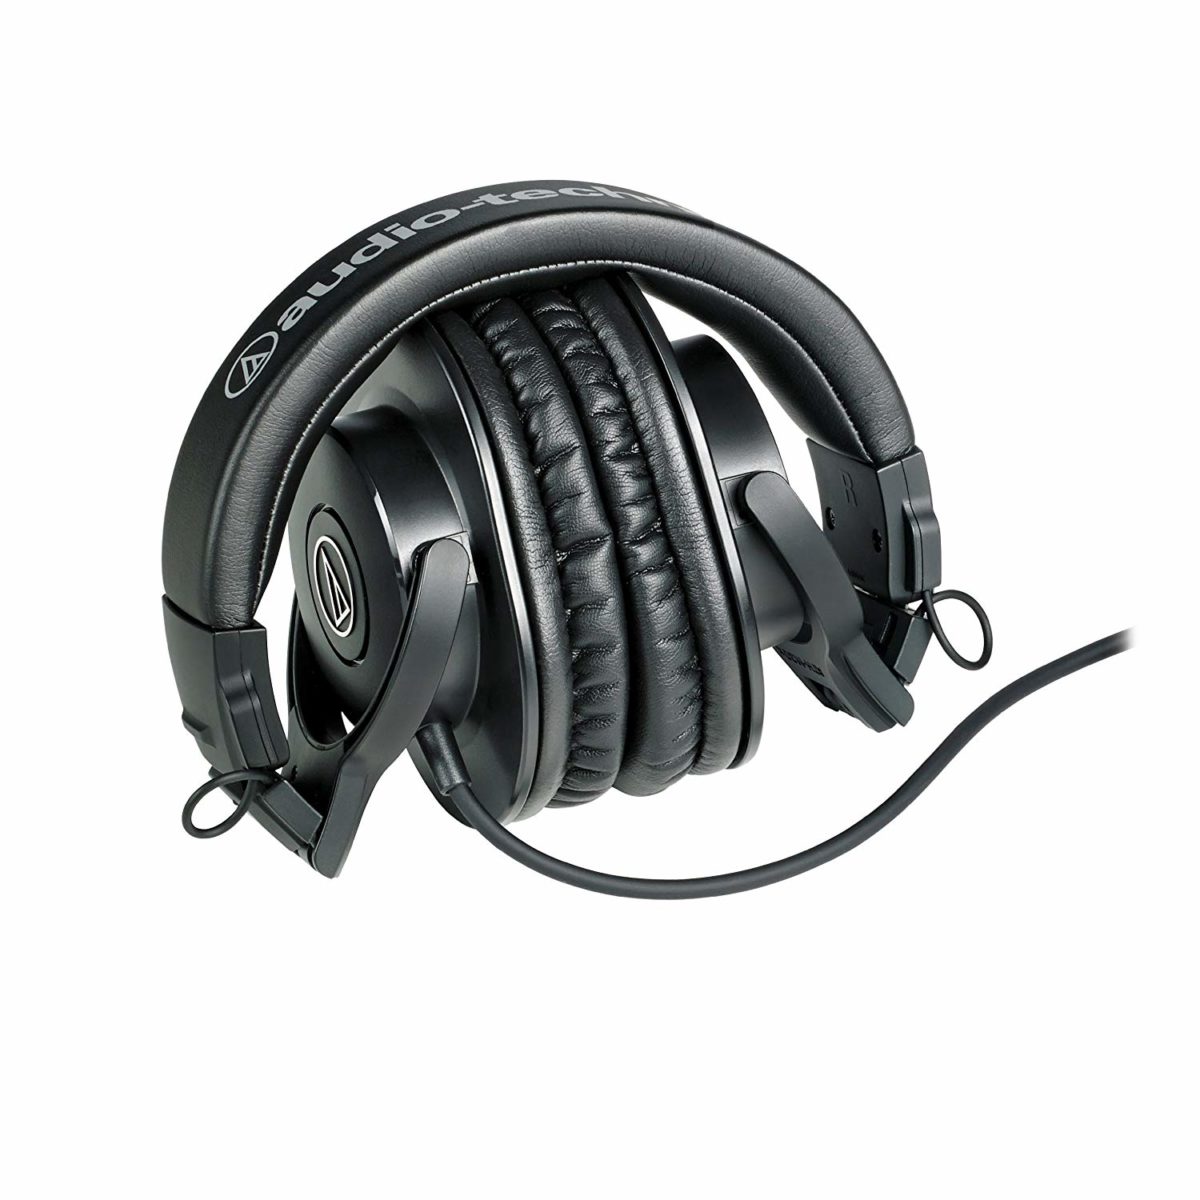 Audio-Technica ATH-M30x Professional Studio Monitor Headphones